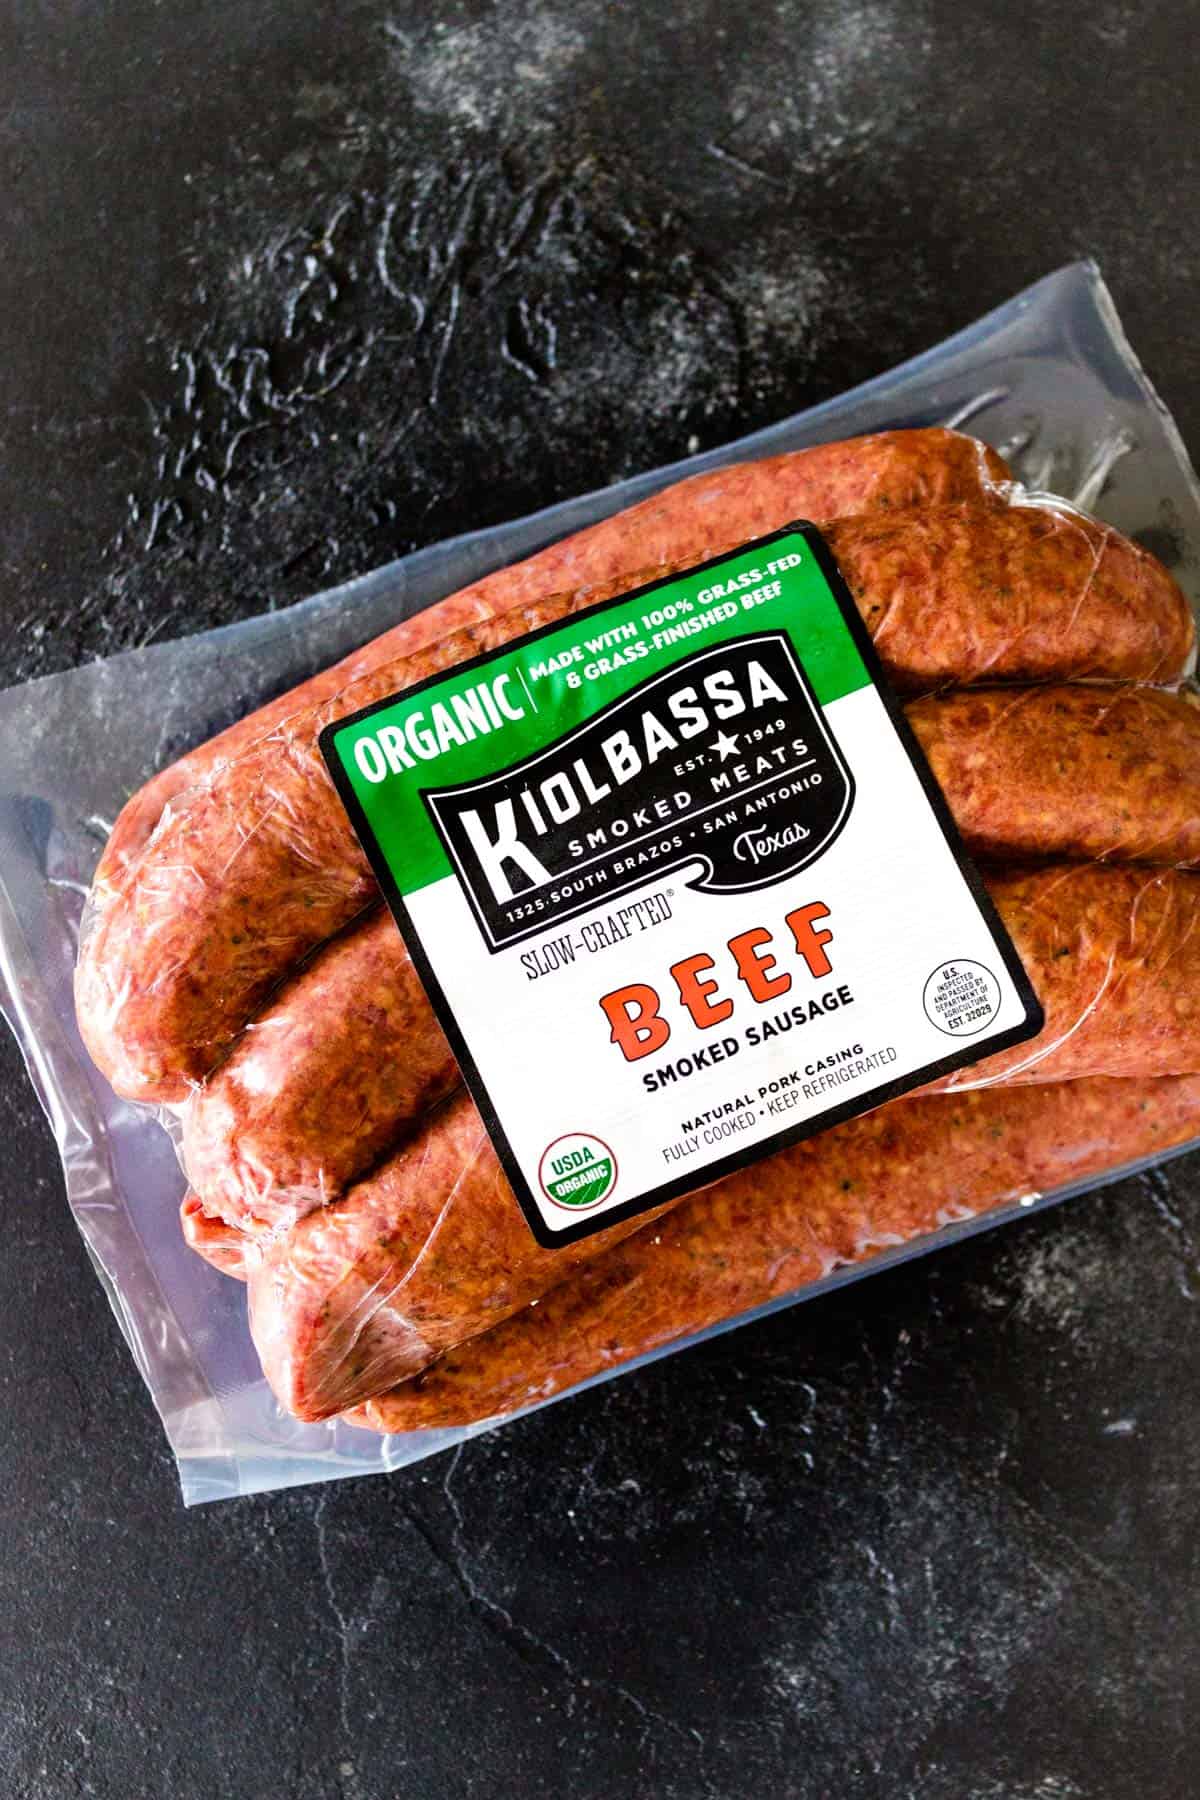 Kiolbassa Smoked Beef Sausages